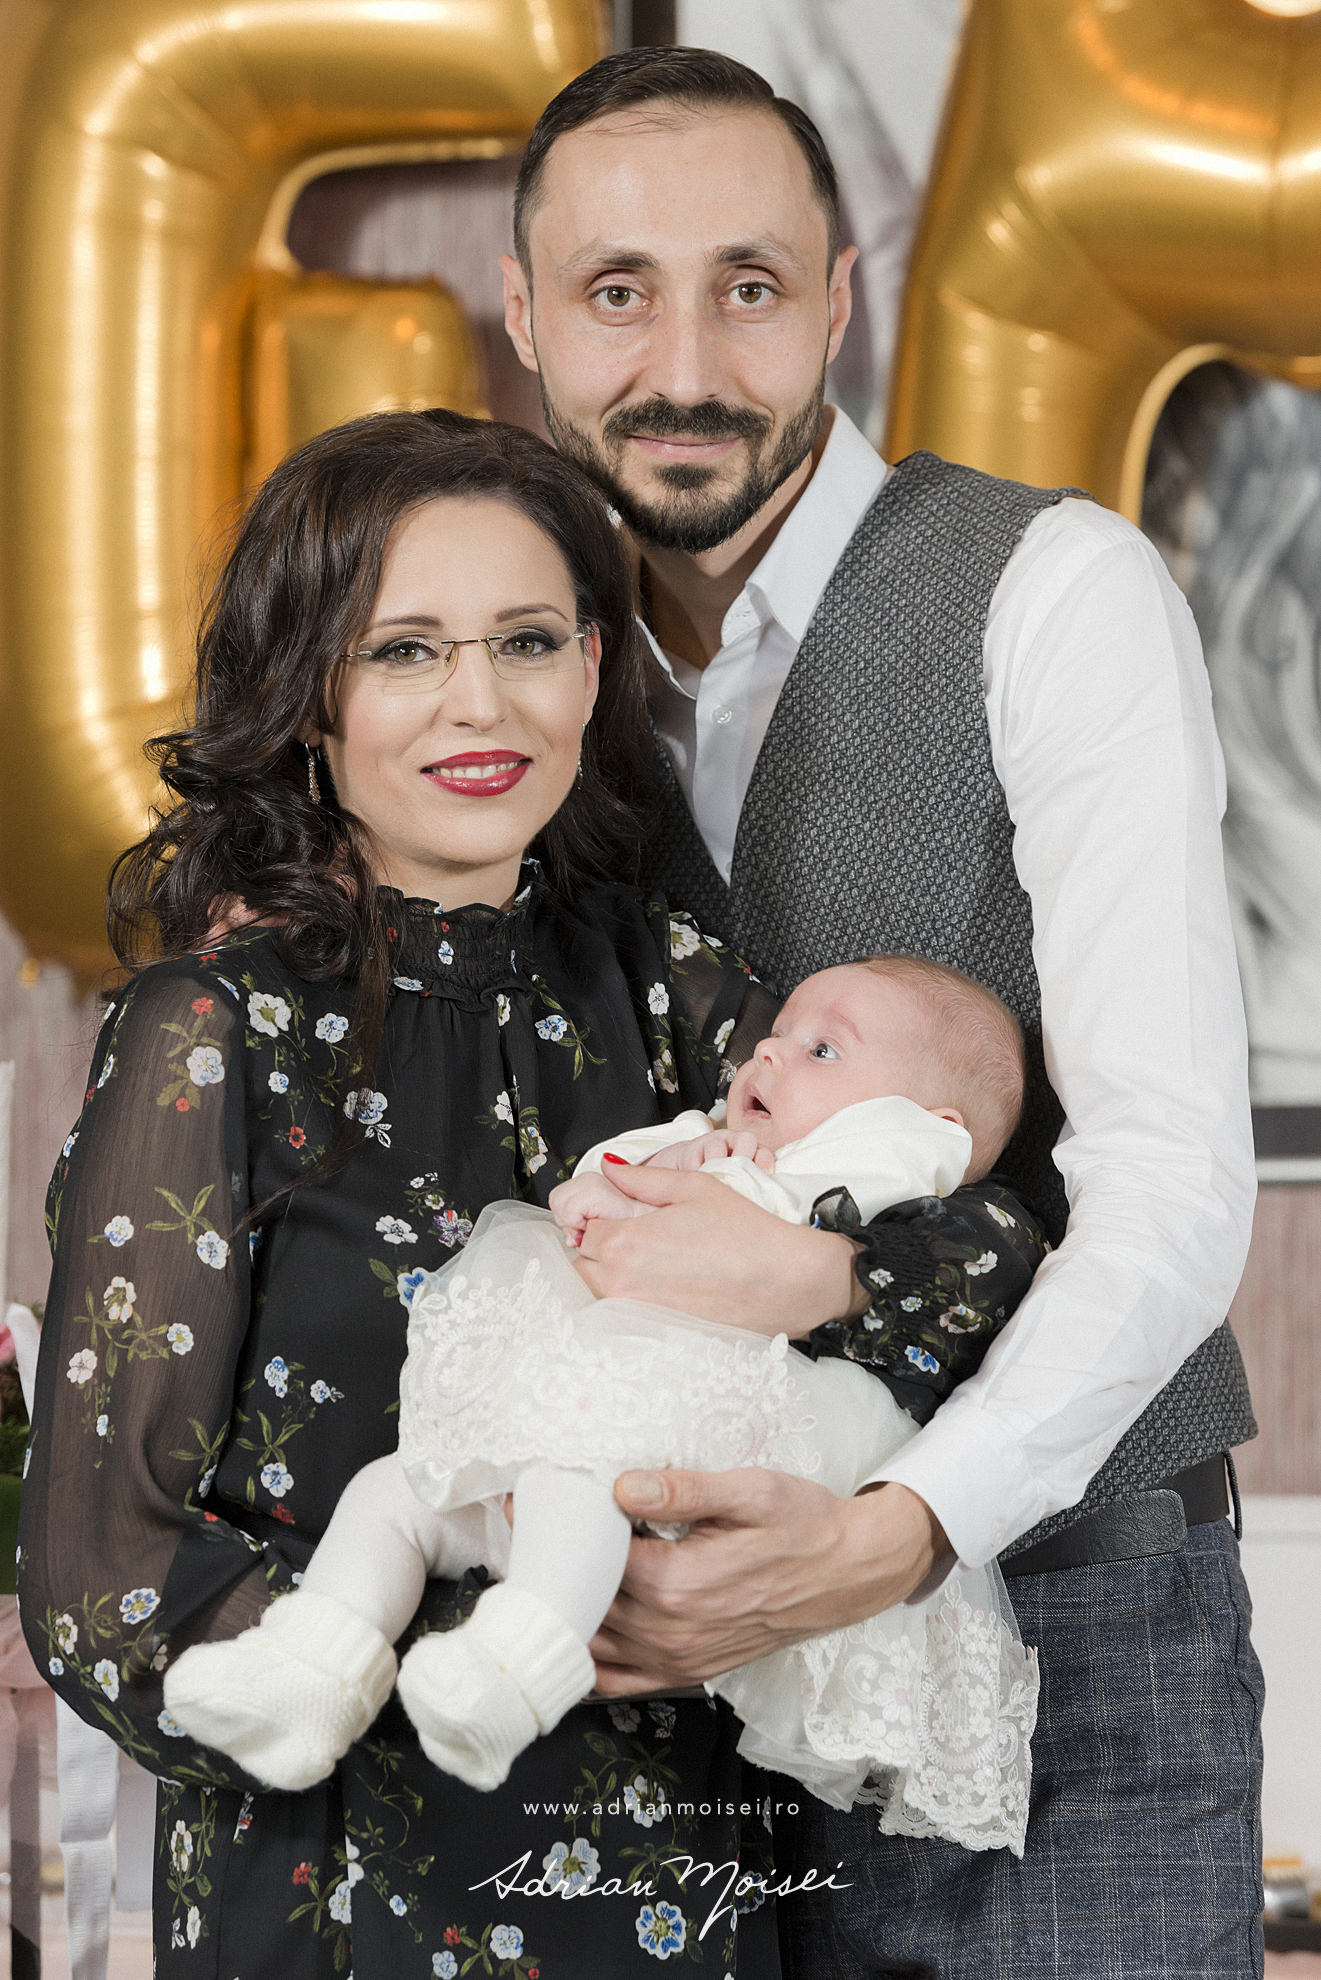 Fotograf de familie in Iasi - parinti cu bebelus in brate - de Craciun - foto Adrian Moisei